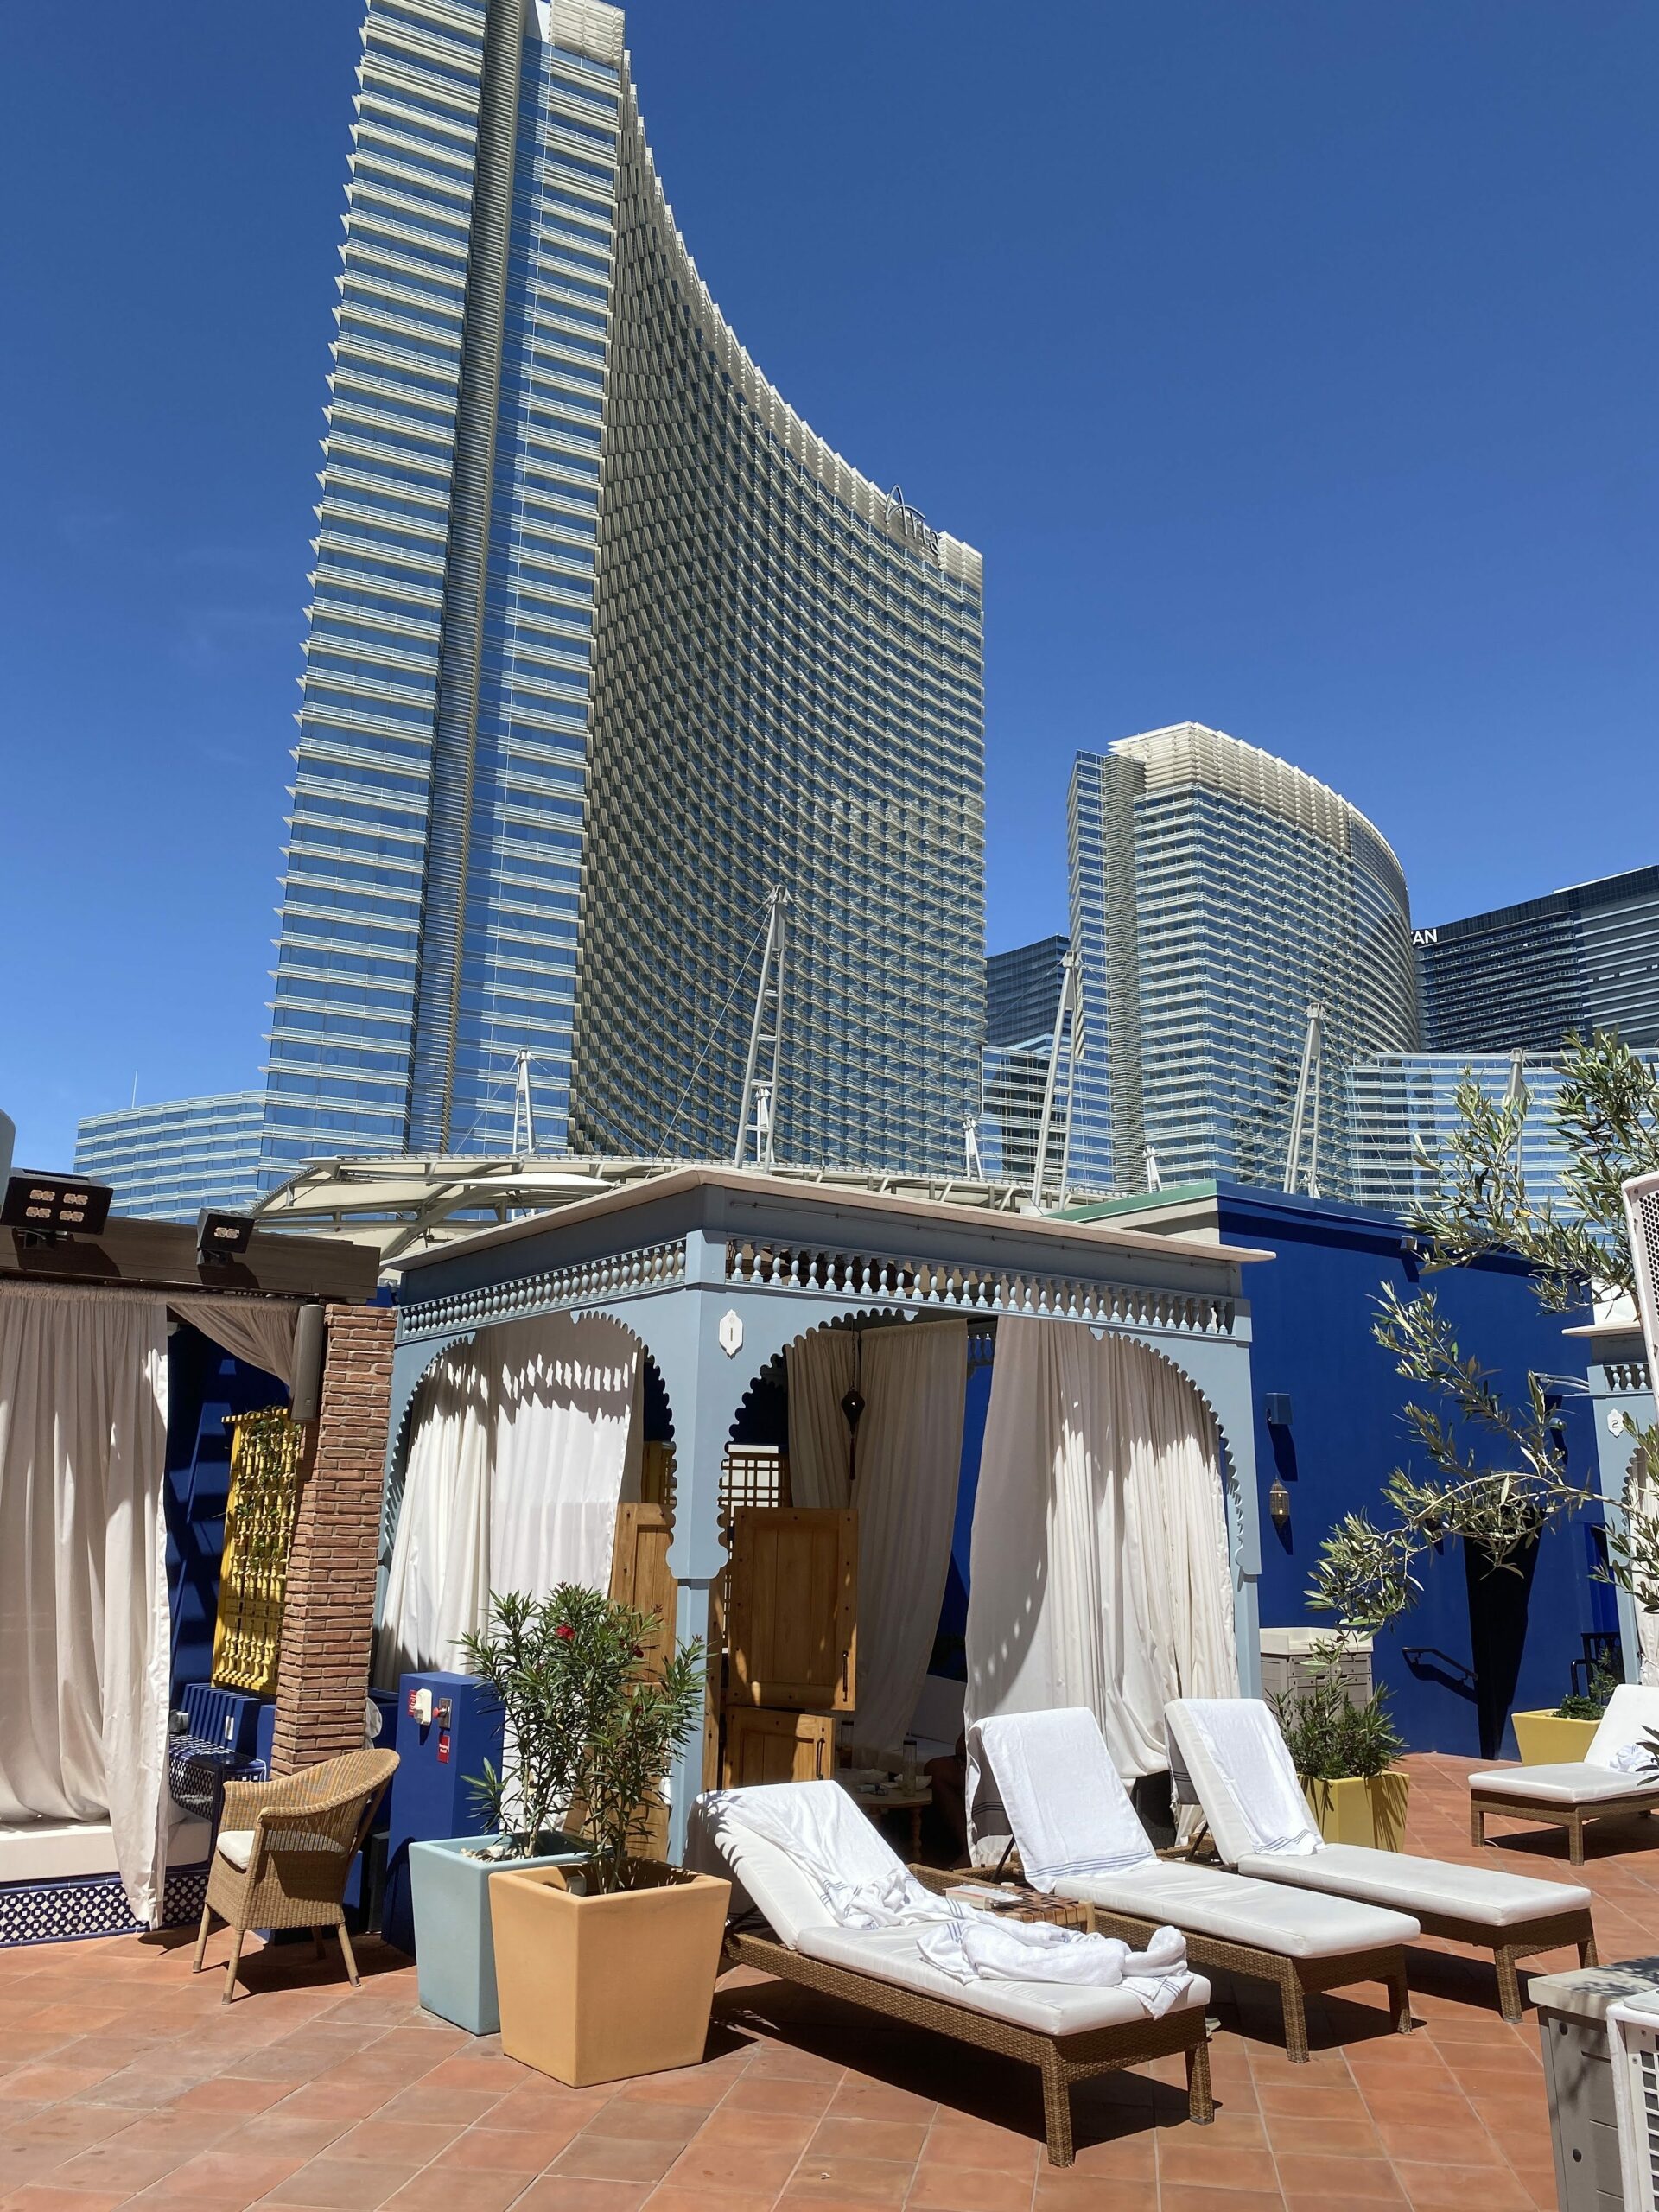 NoMad Las Vegas — Hotel Review